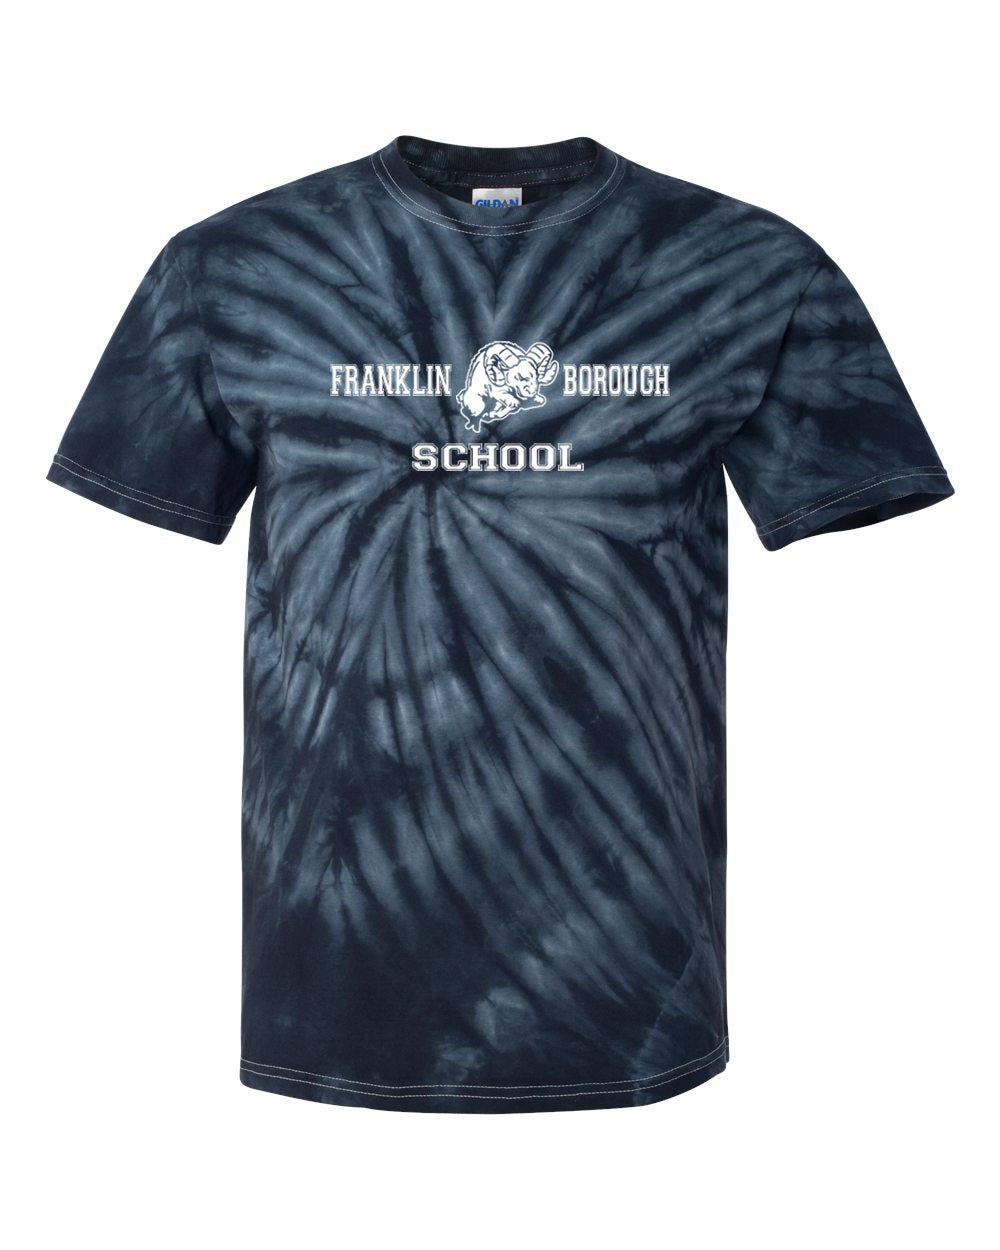 Franklin School Tie Dye t-shirt Design 3